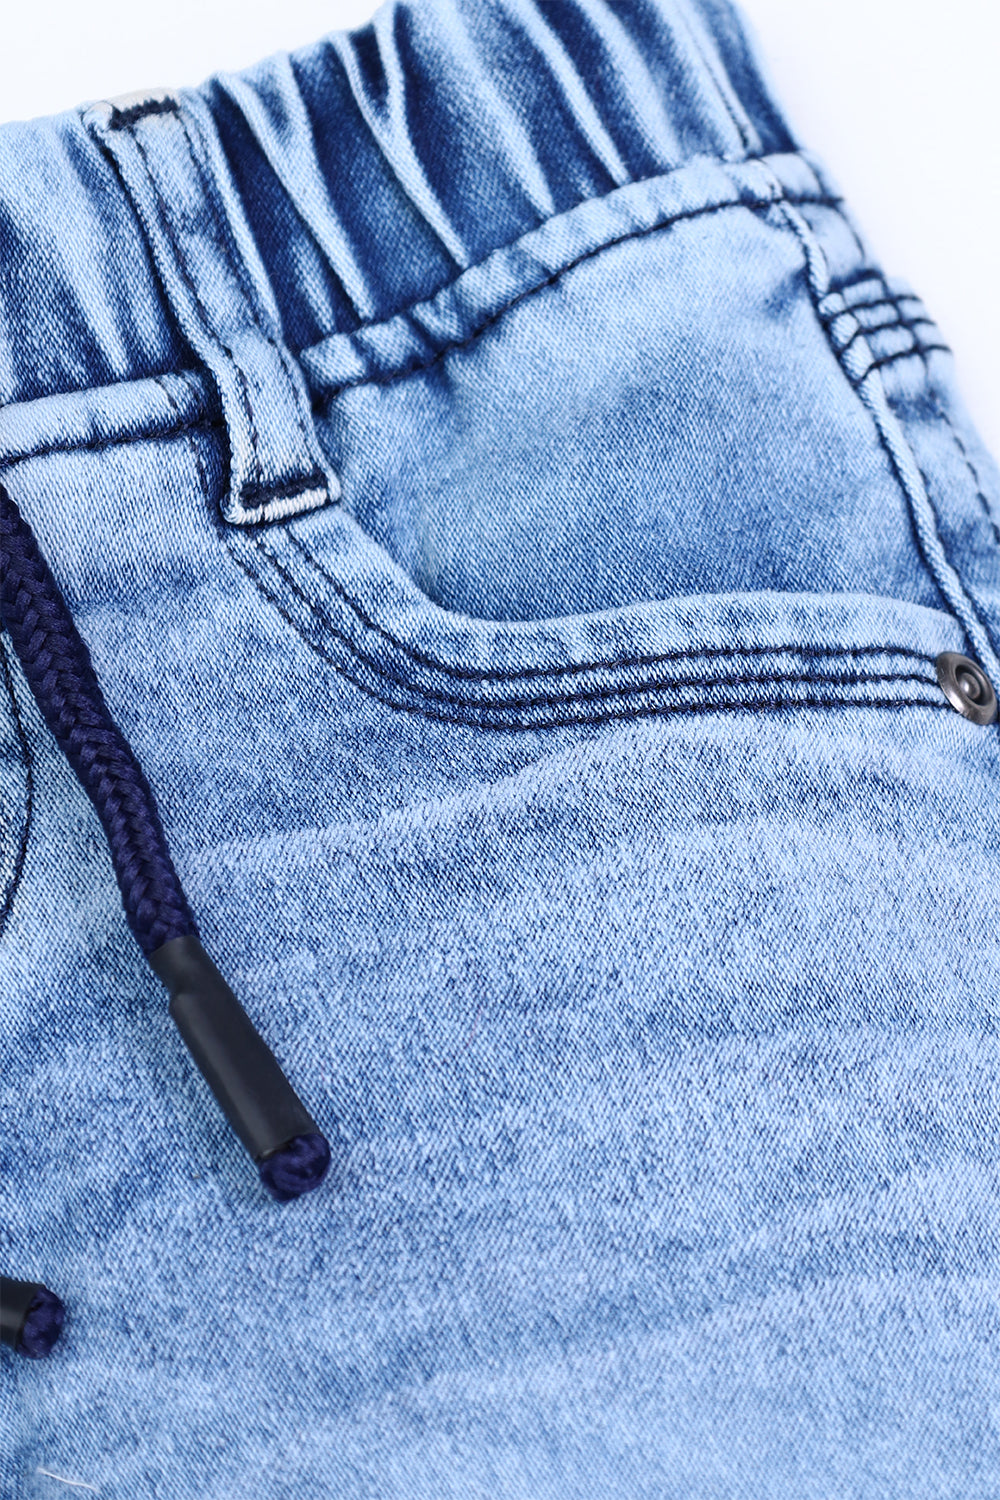 Light blue Denim short with draw string 100% cotton fabric